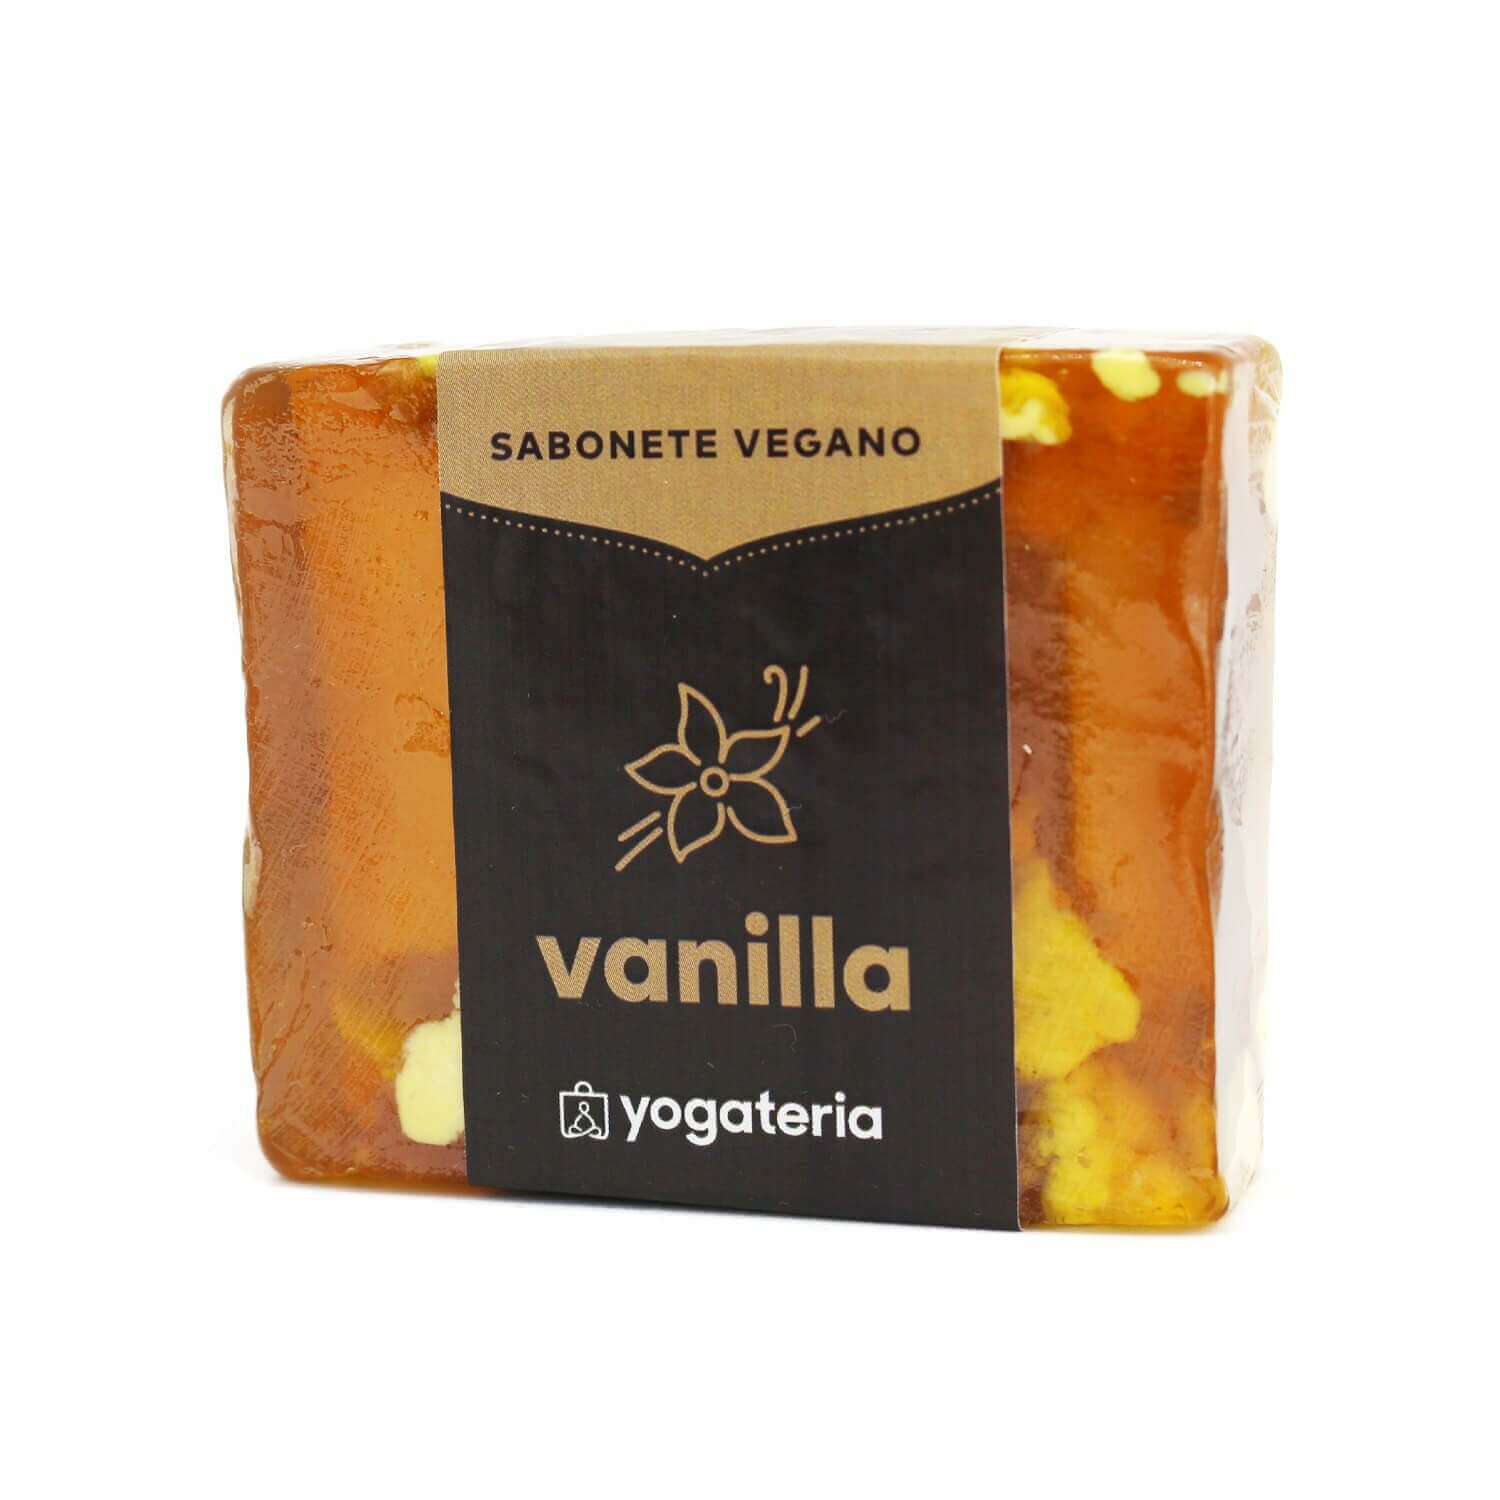 Sabonete Vegano Vanilla 12